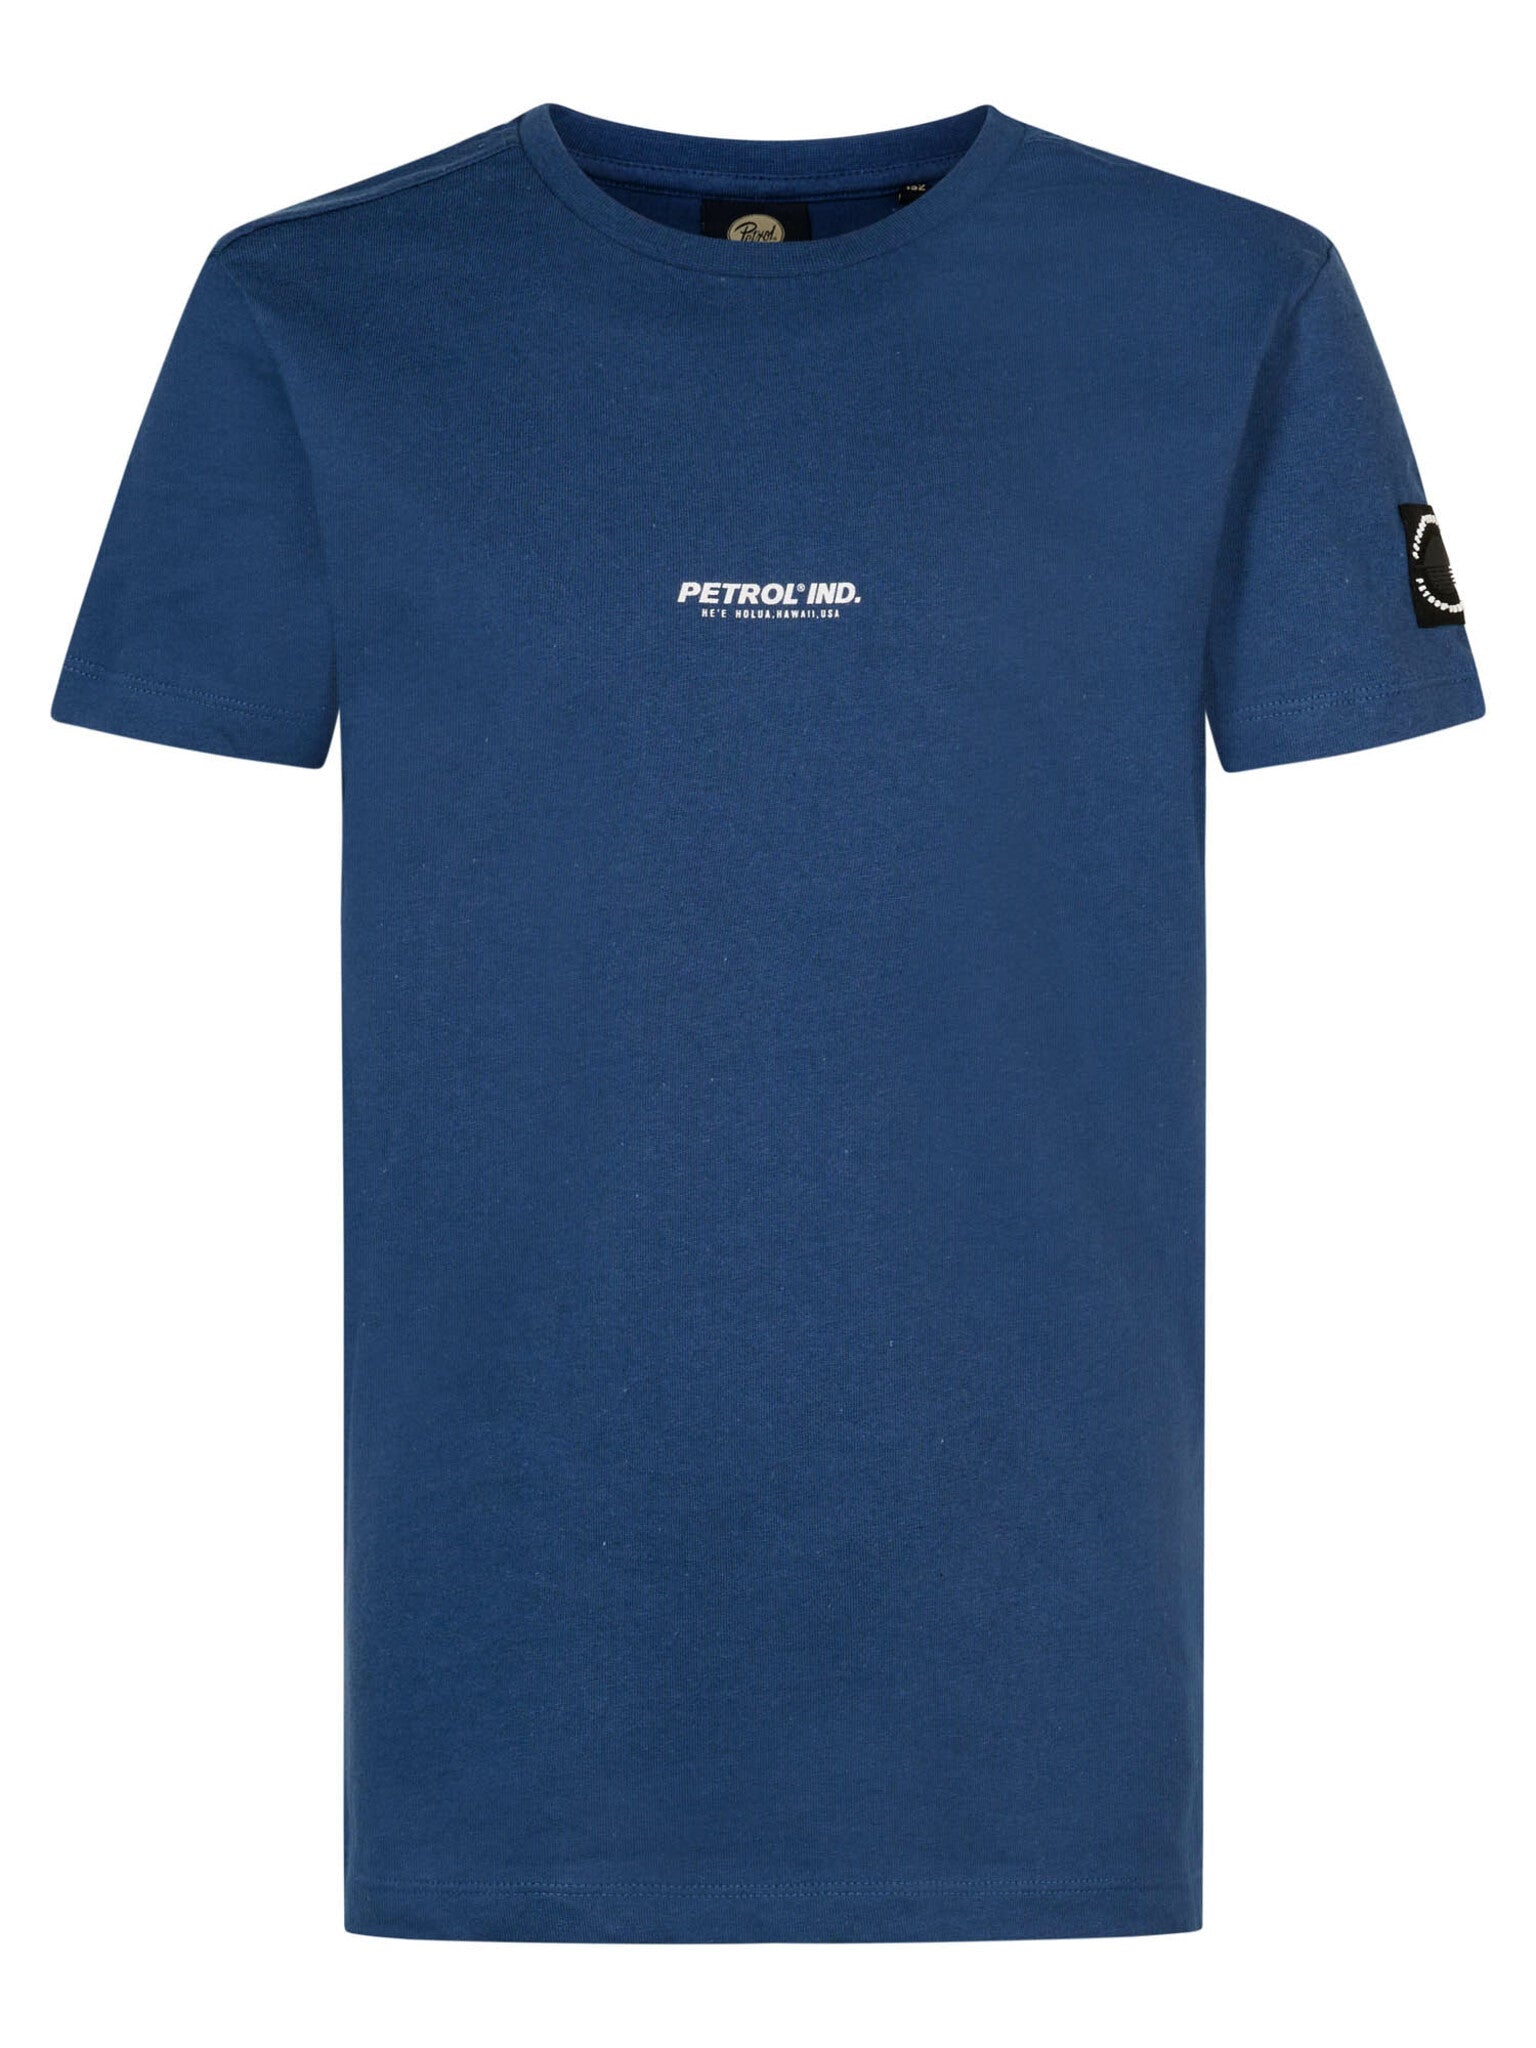 Jongens Boys T-Shirt SS van Petrol in de kleur Petrol Blue in maat 176.